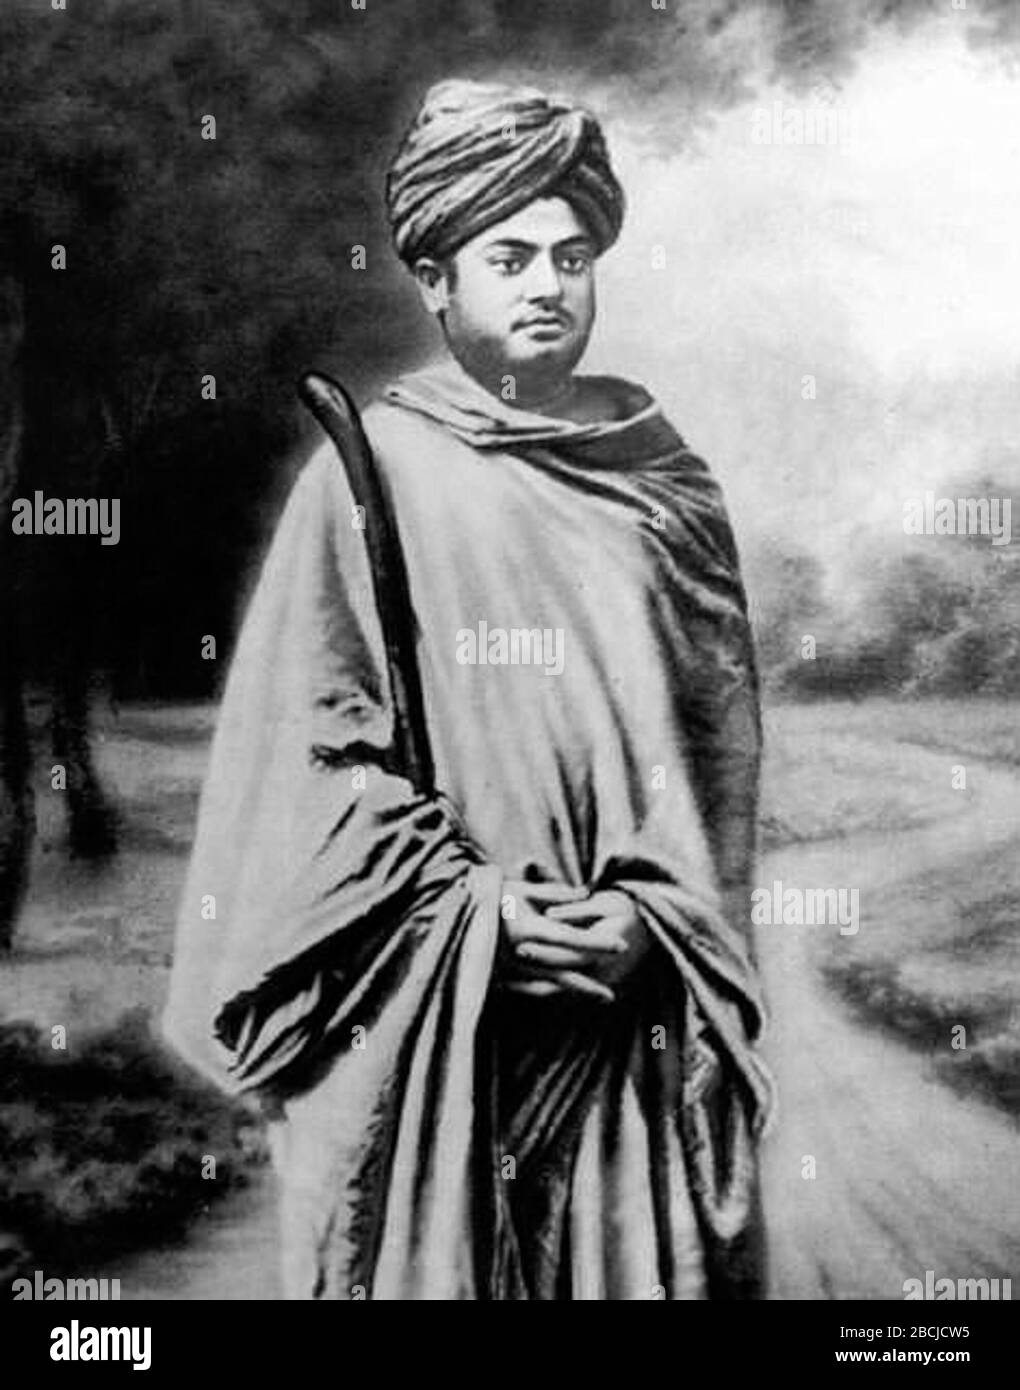 Swami vivekananda Black and White Stock Photos & Images - Alamy